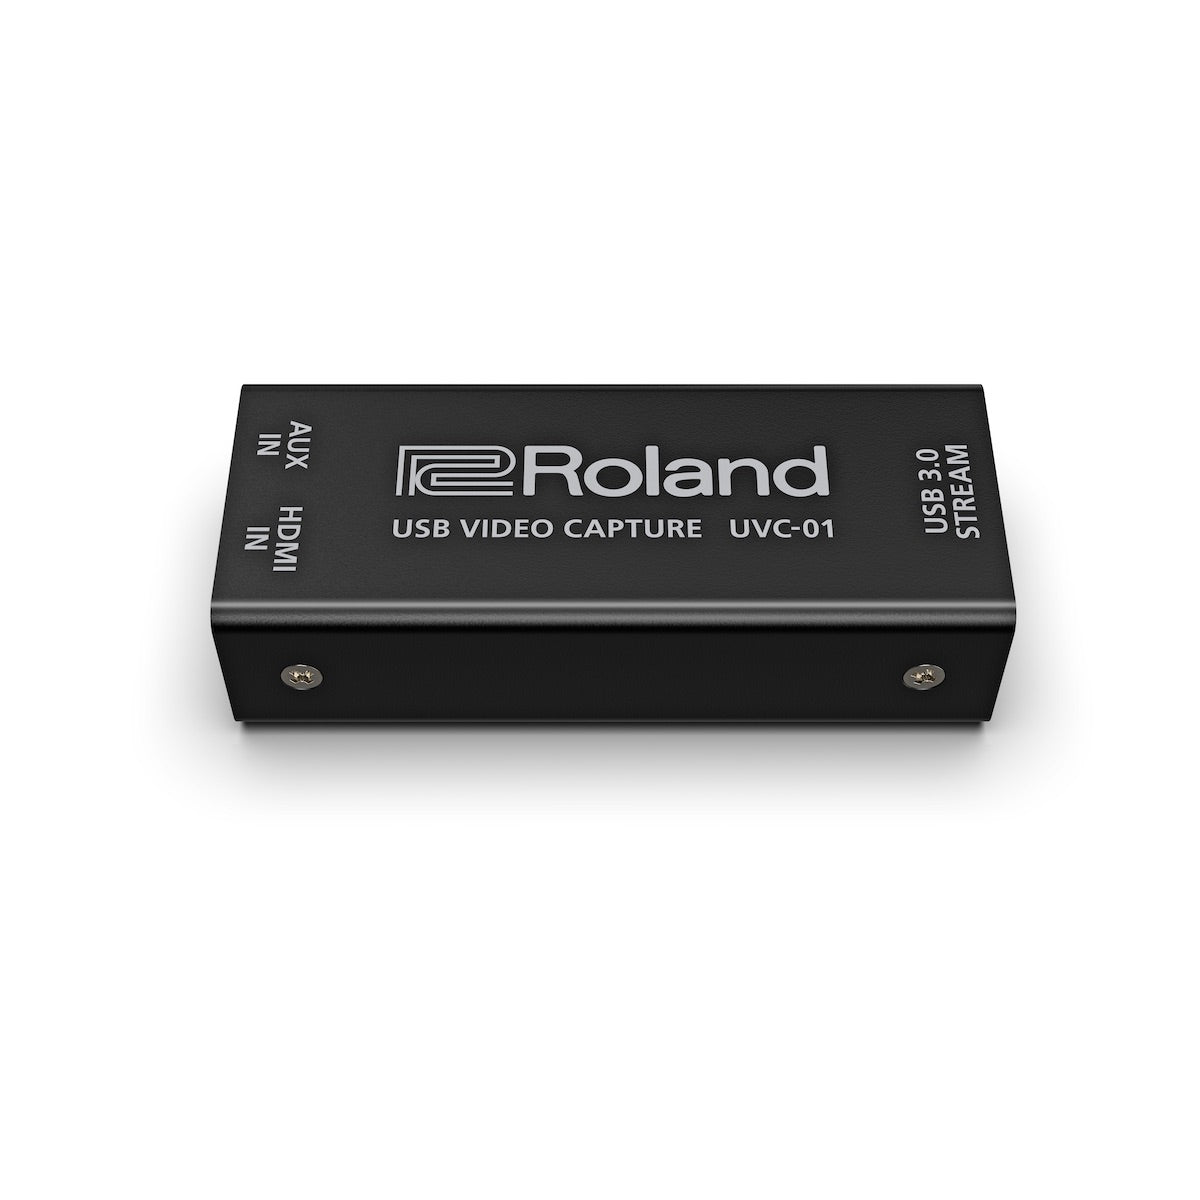 Roland UVC-01 - USB Video Capture/Encoder Device, front